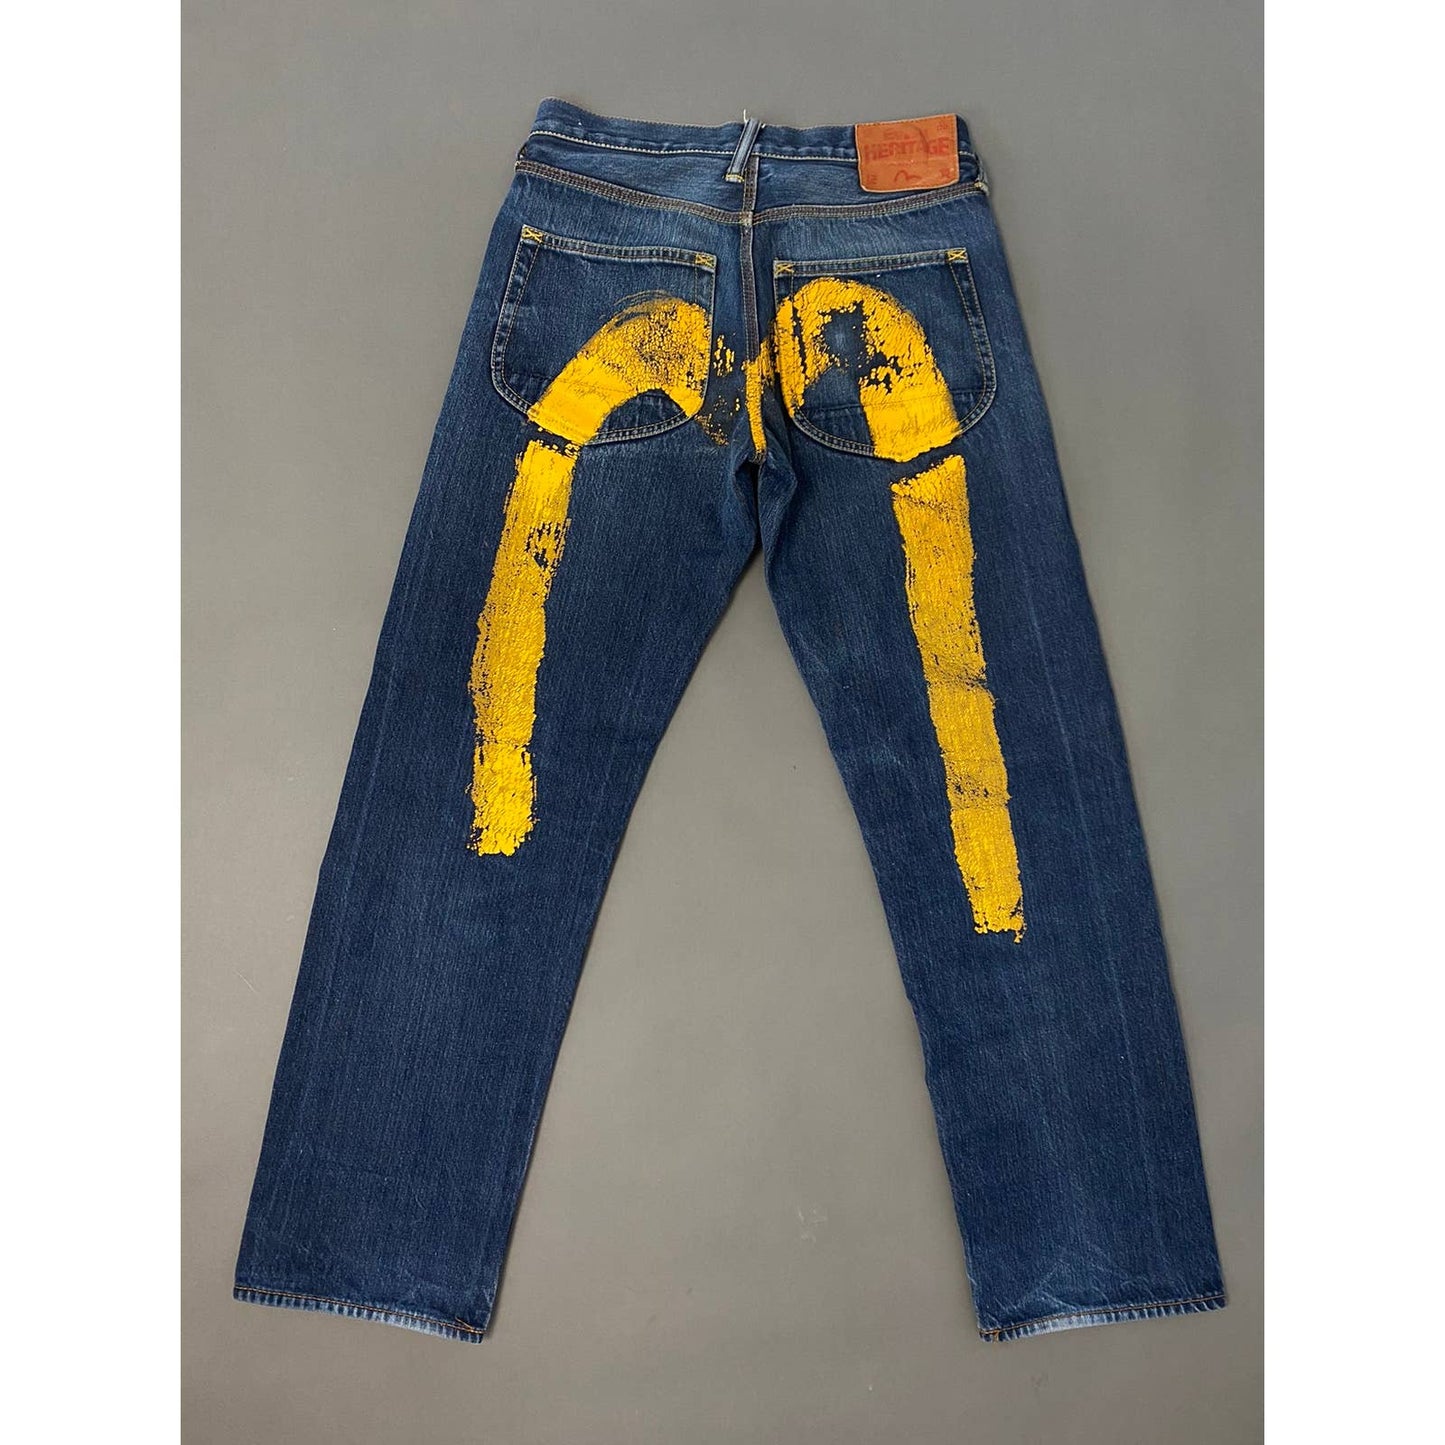 Evisu Japan vintage selvedge blue jeans yellow daicock